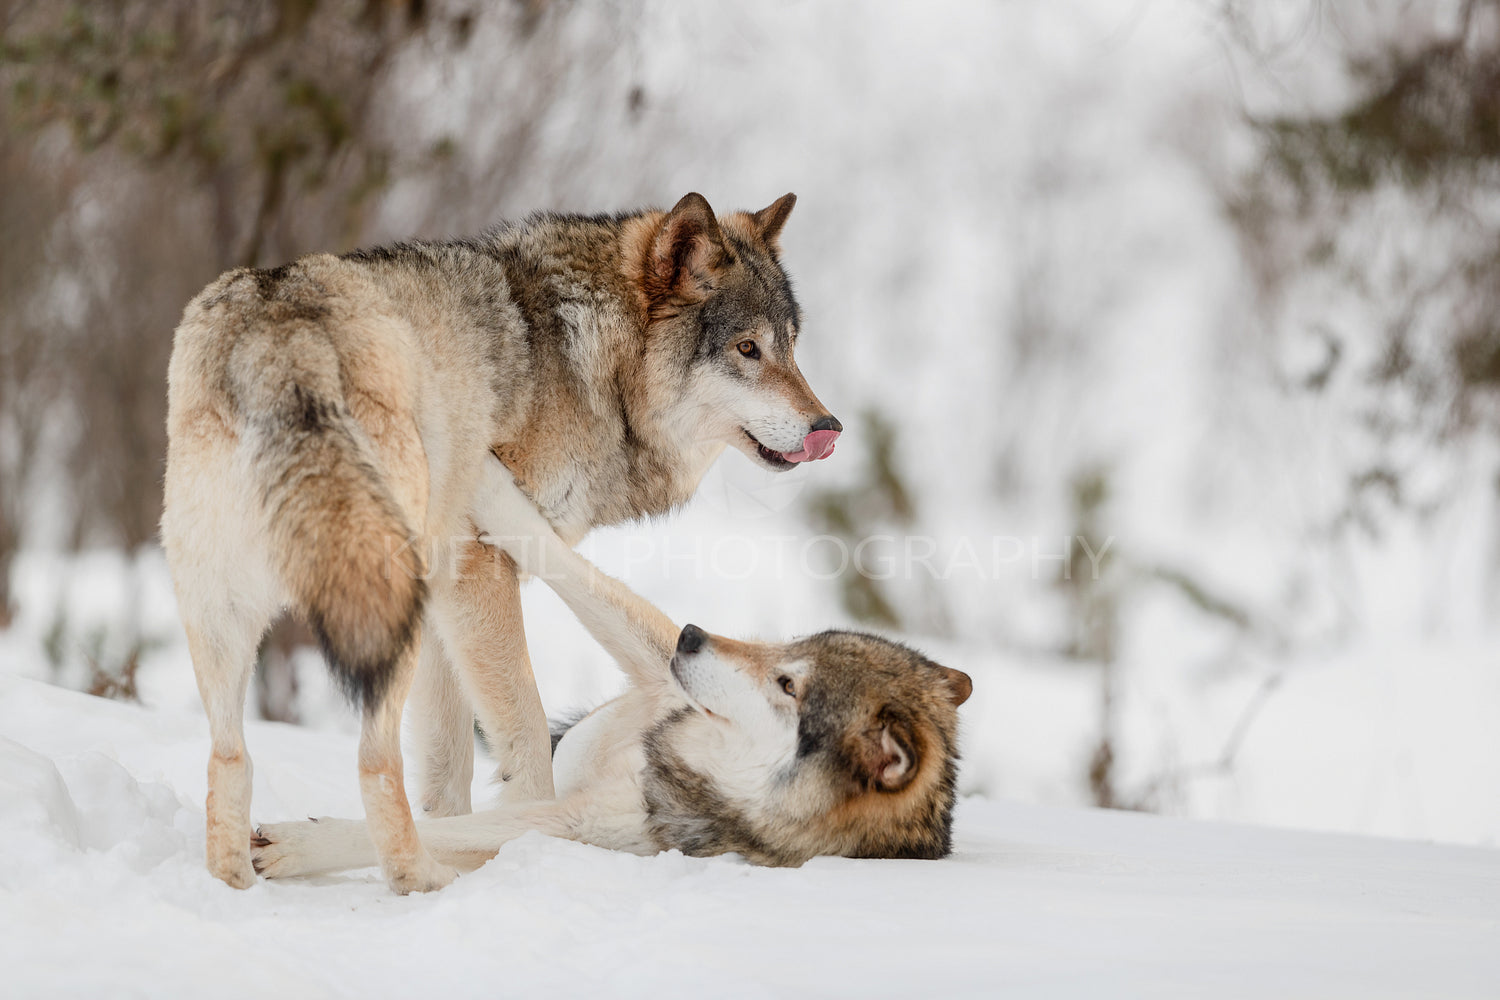 Eurasian wolves roughhousing on snow in nature